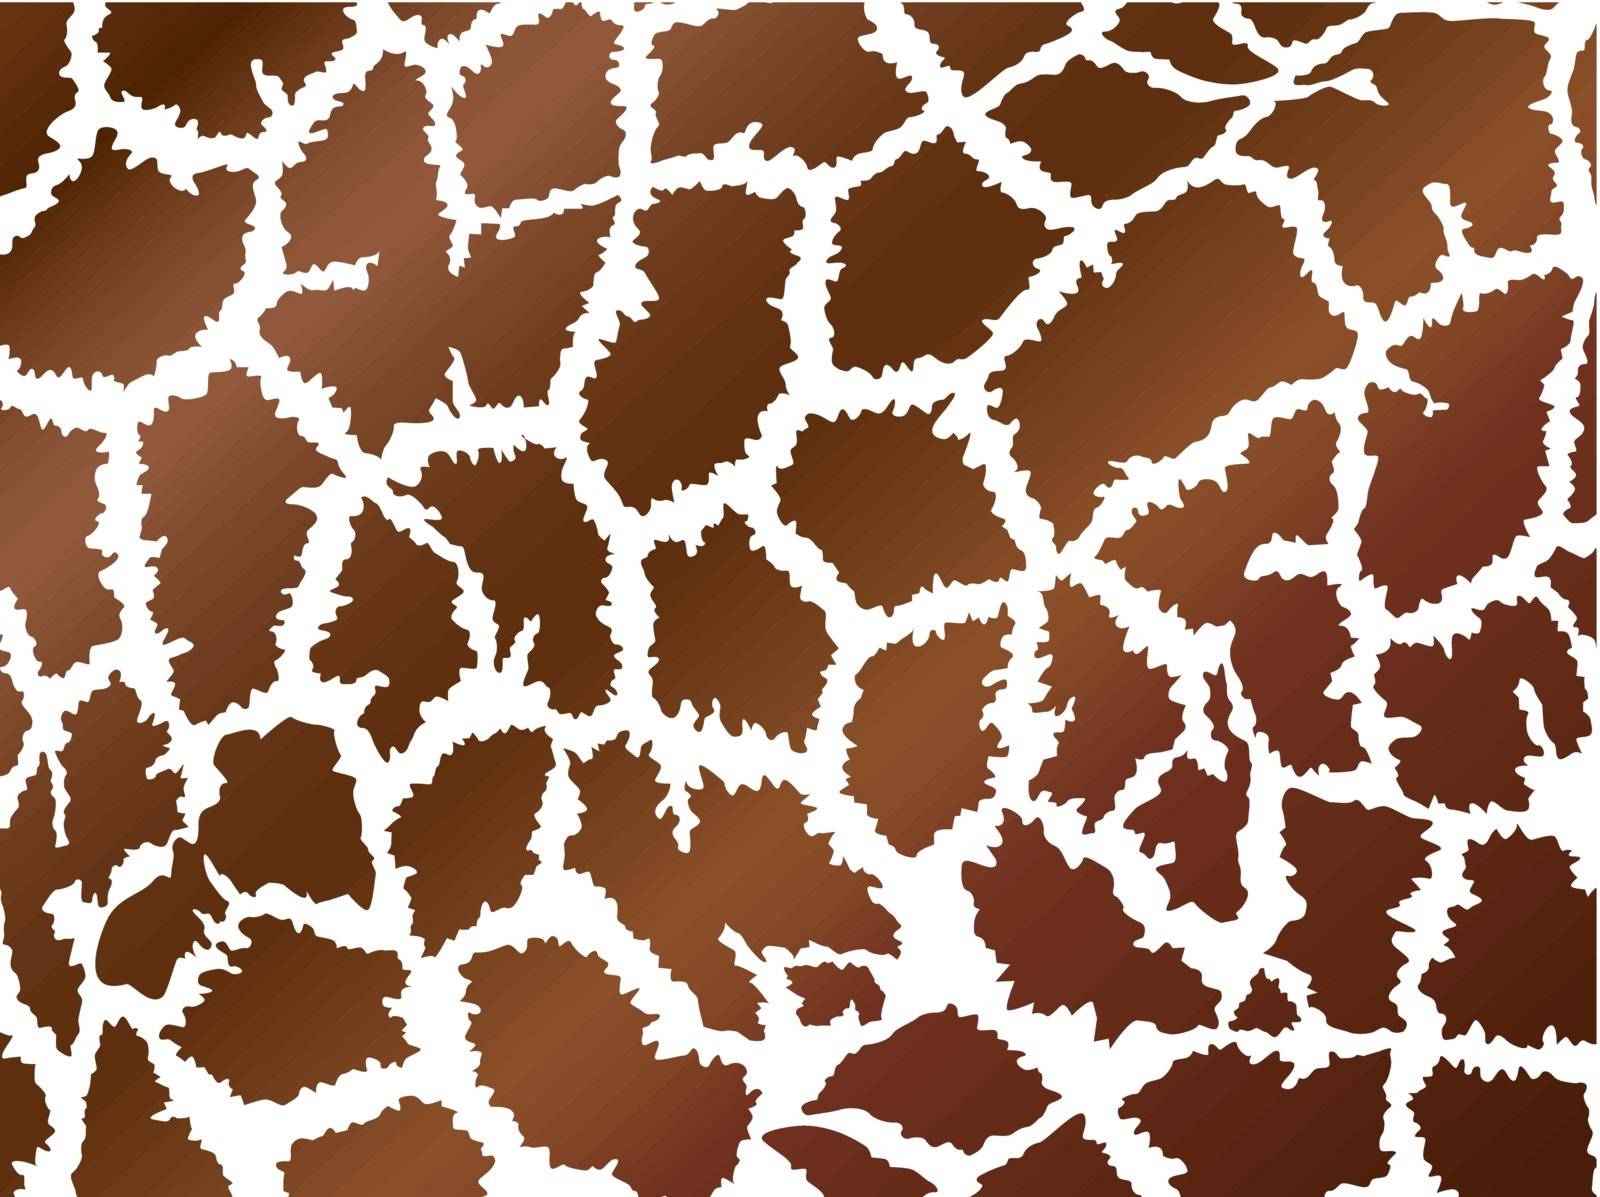 background in giraffe skin style by SNR